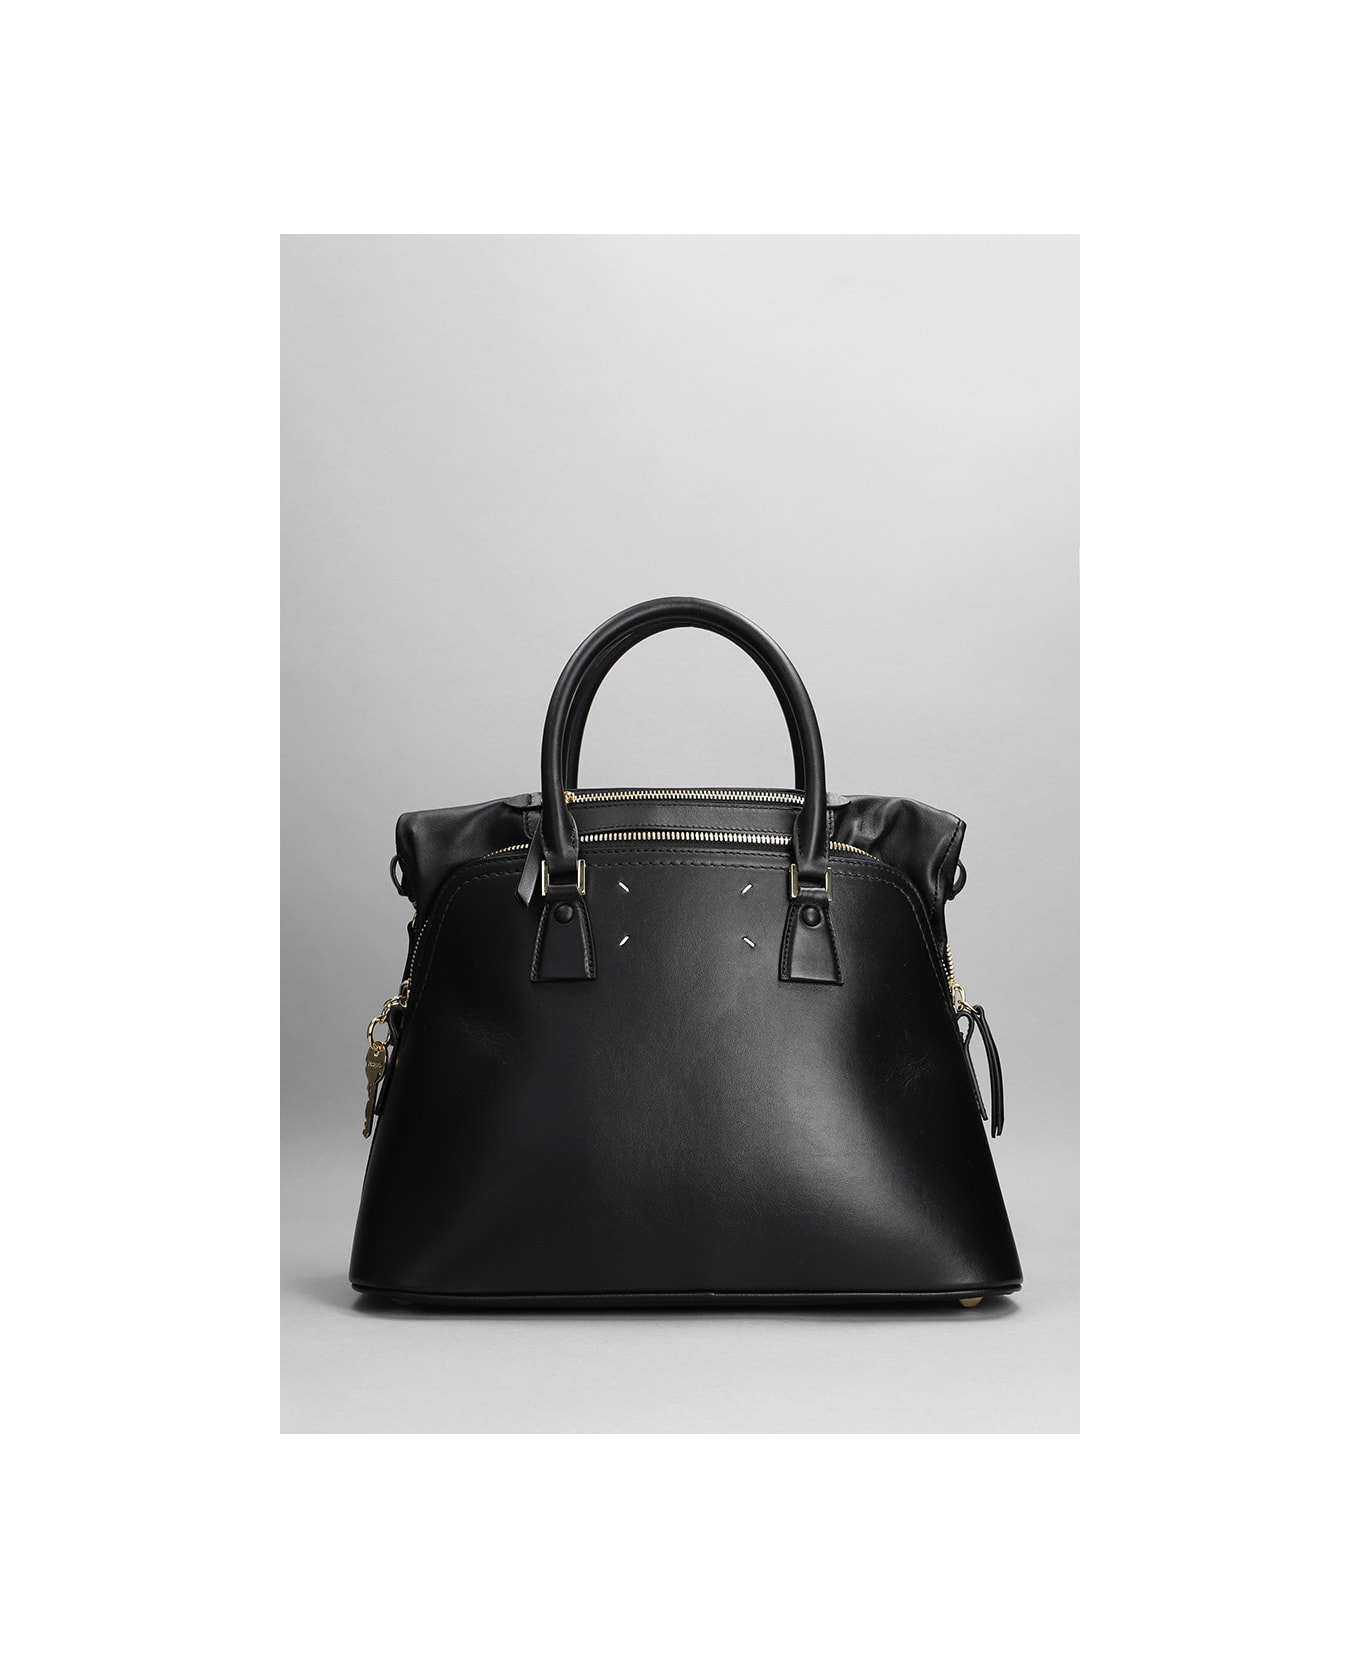 Maison Margiela Hand Bag In Black Leather - black